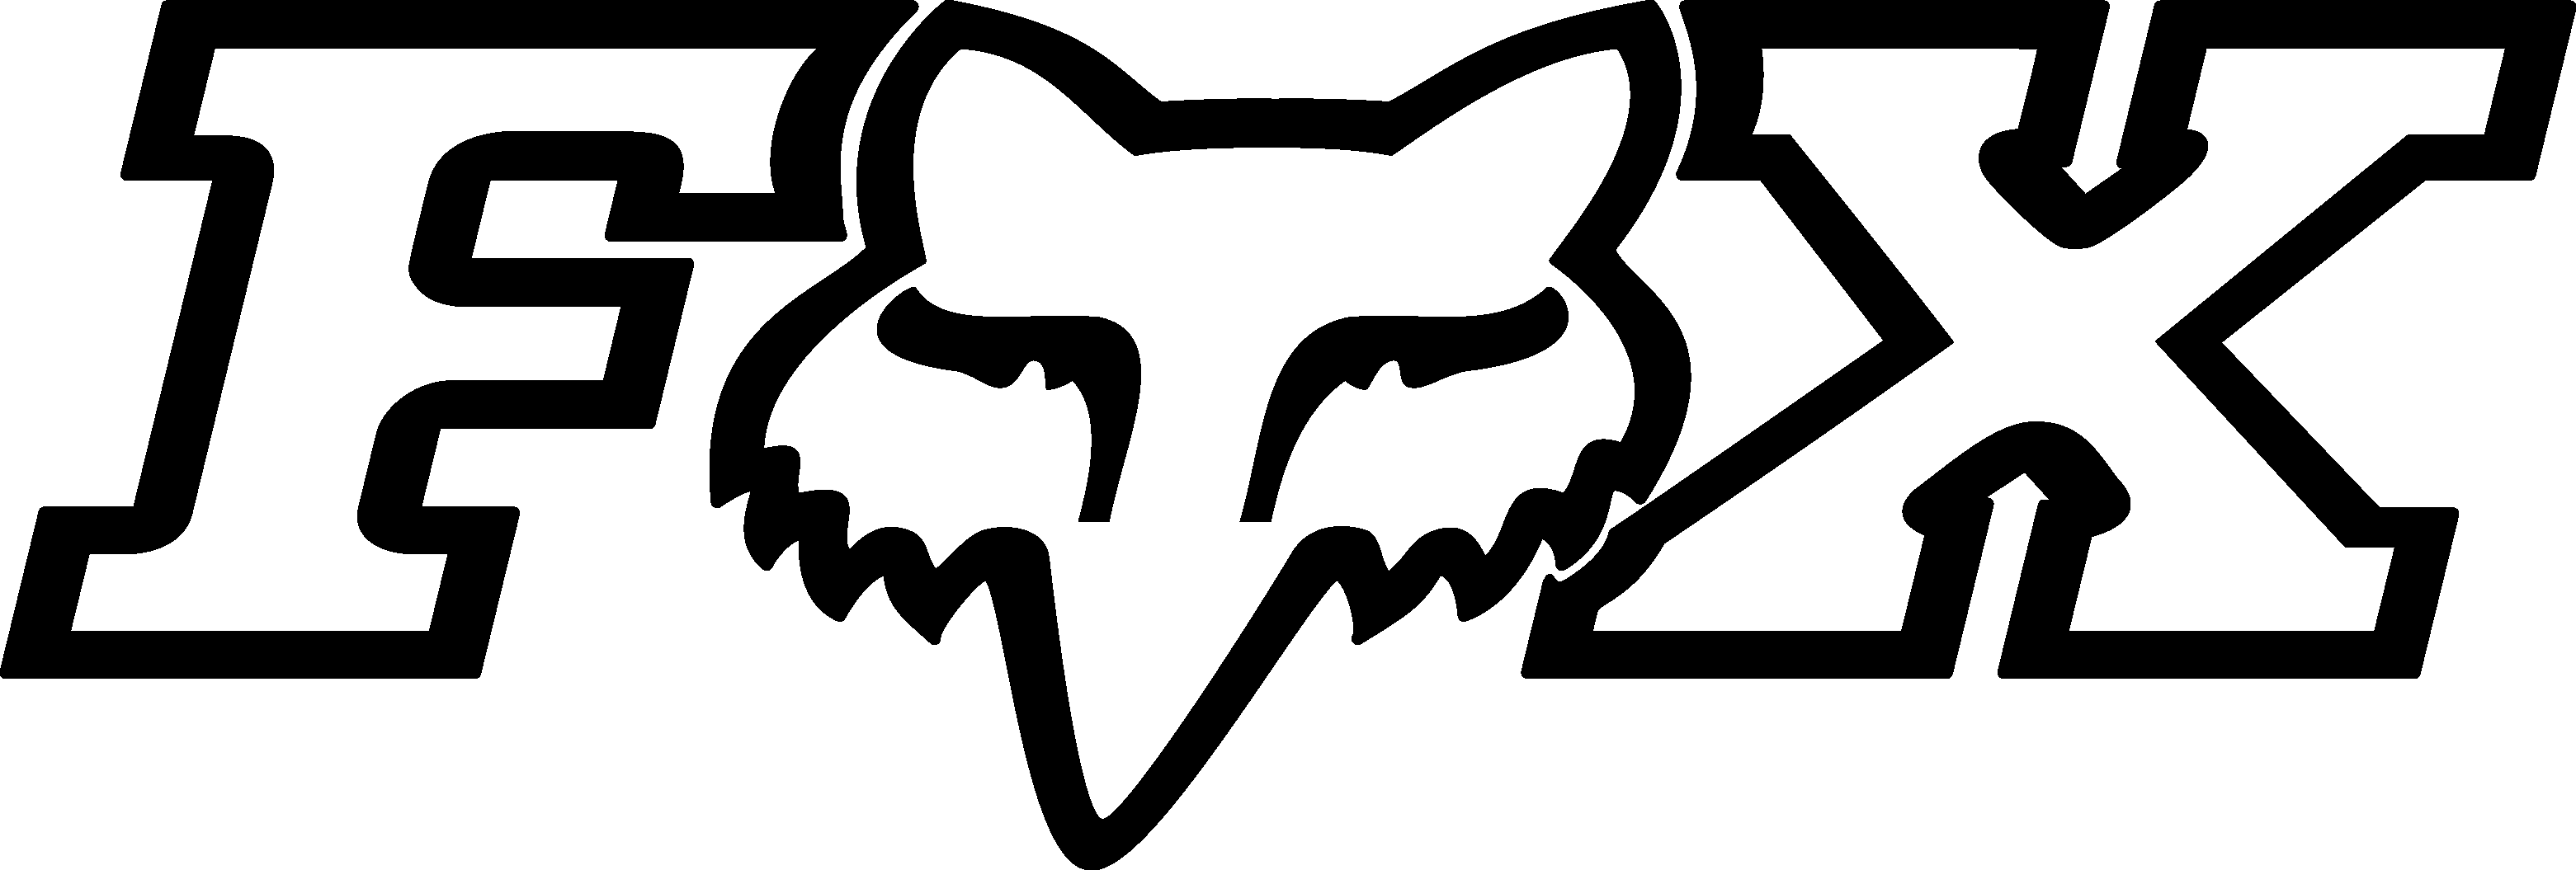 Fox Motocross Logo - Fox Racing Logo Vector Free Download